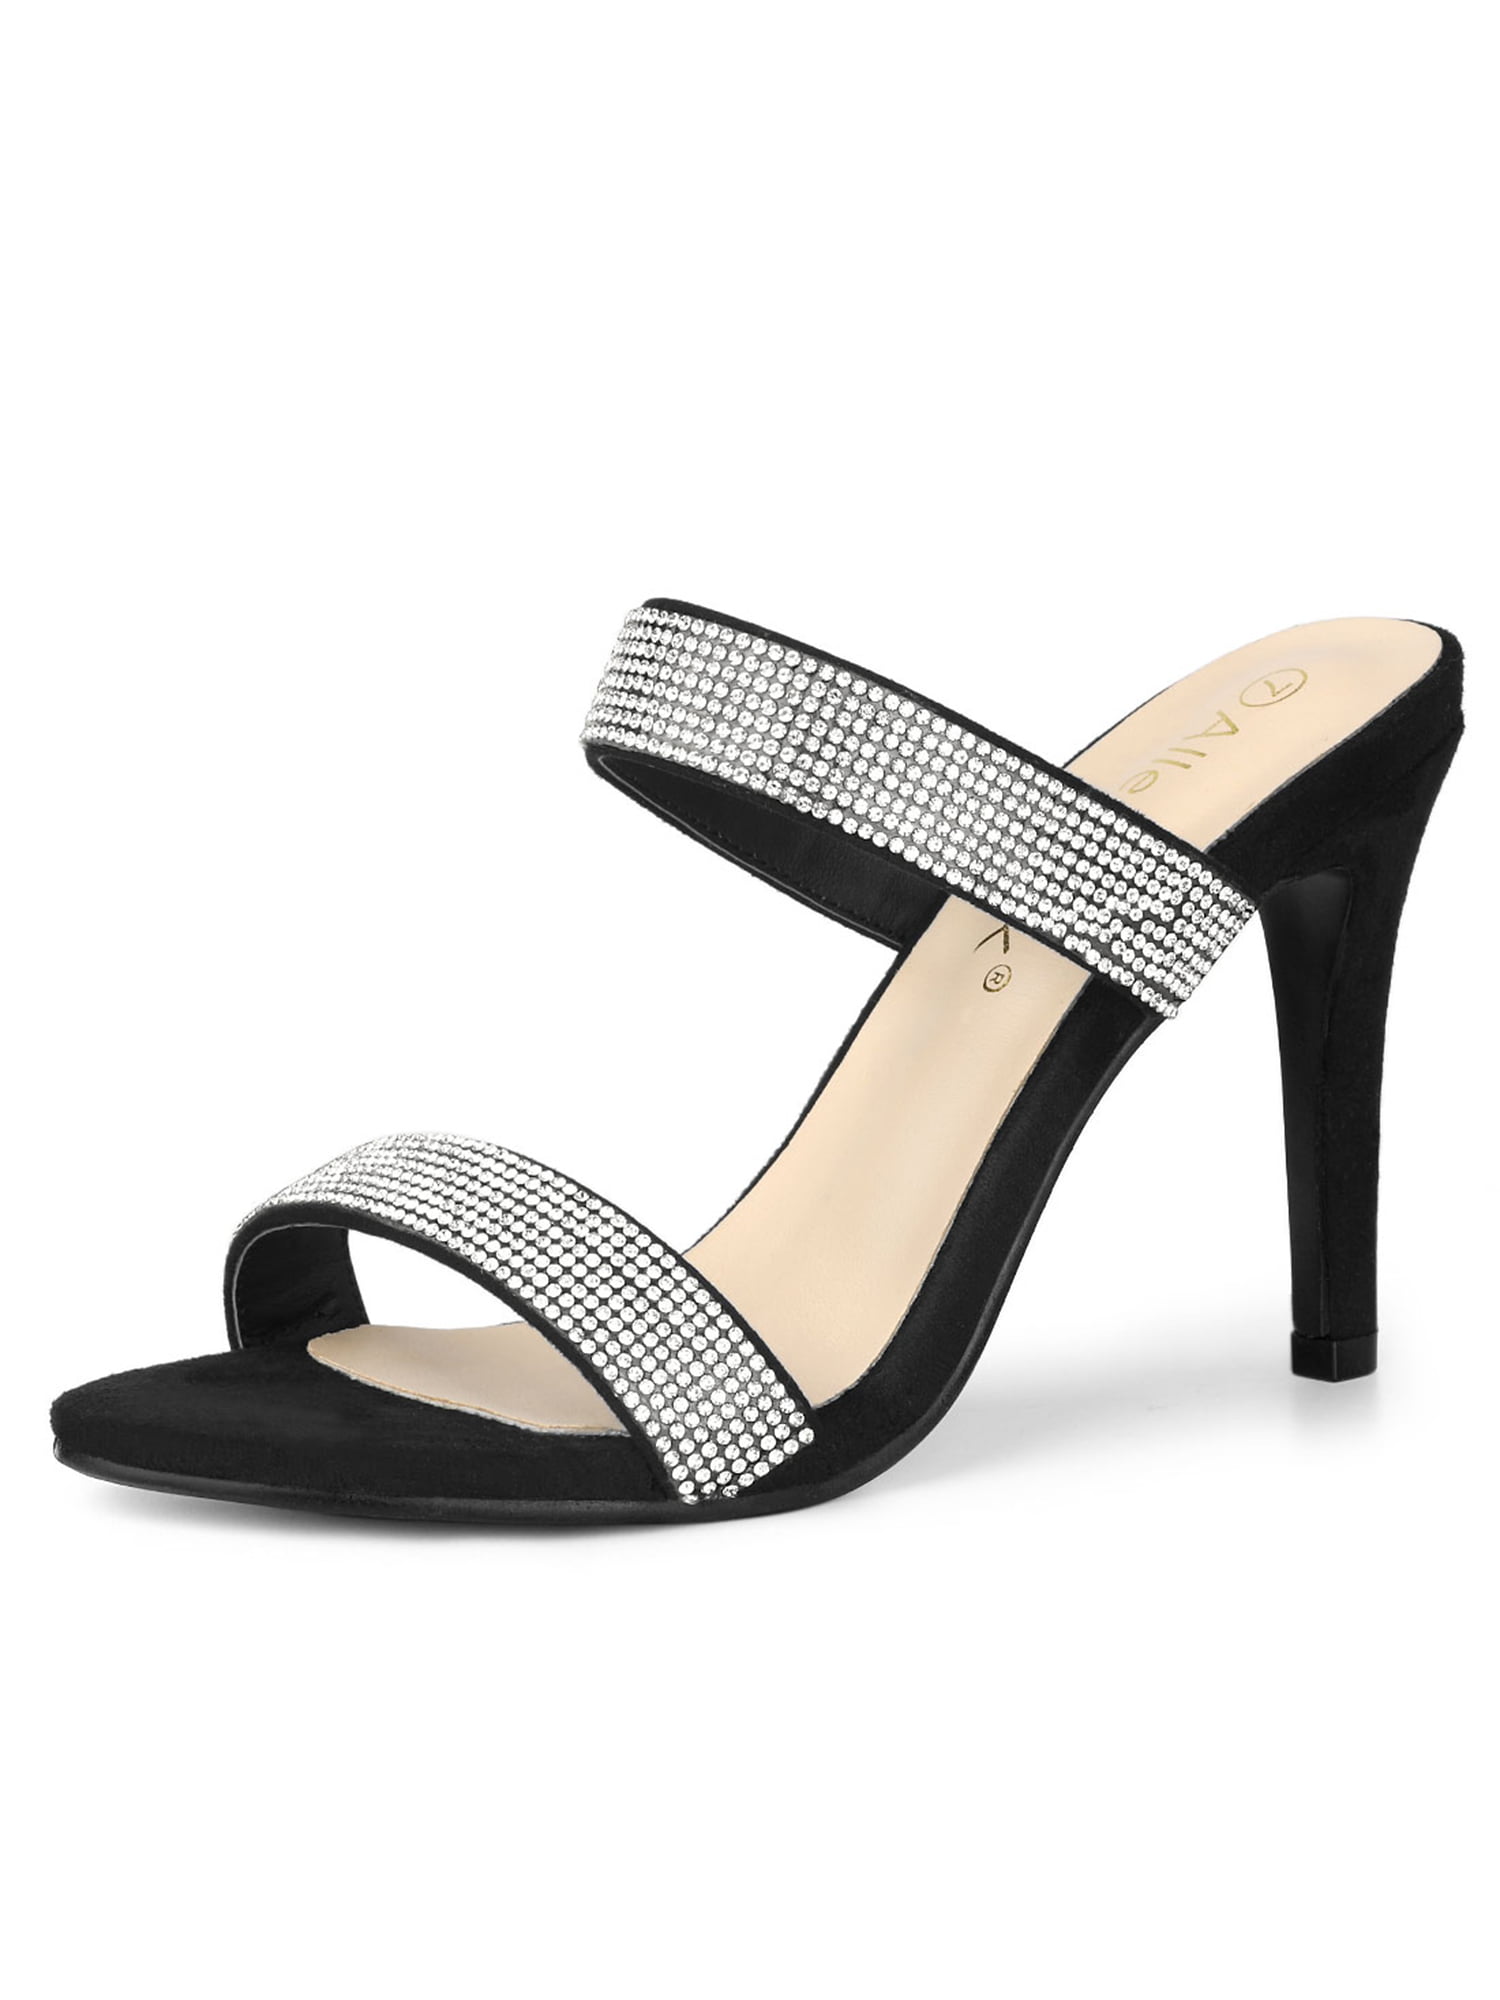 Unique Bargains - Women's Stiletto High Heel Rhinestone Mules Sandals ...